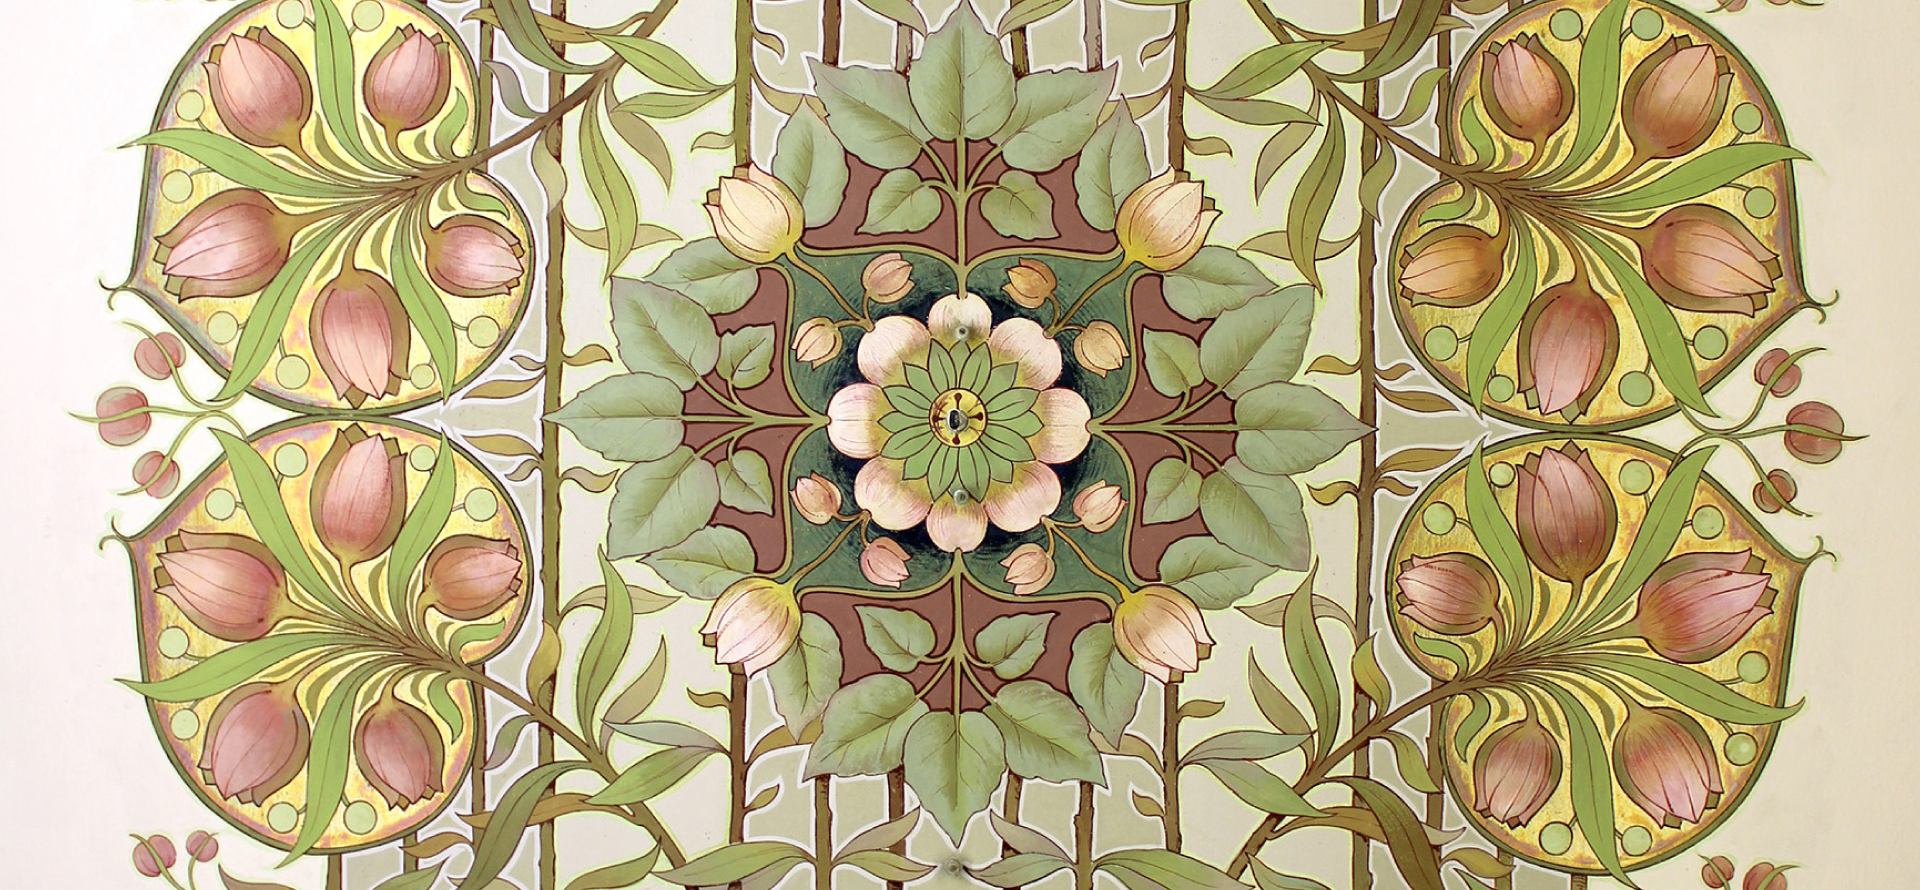 L’Art Nouveau fiorisce nel salone di Ernesto Basile